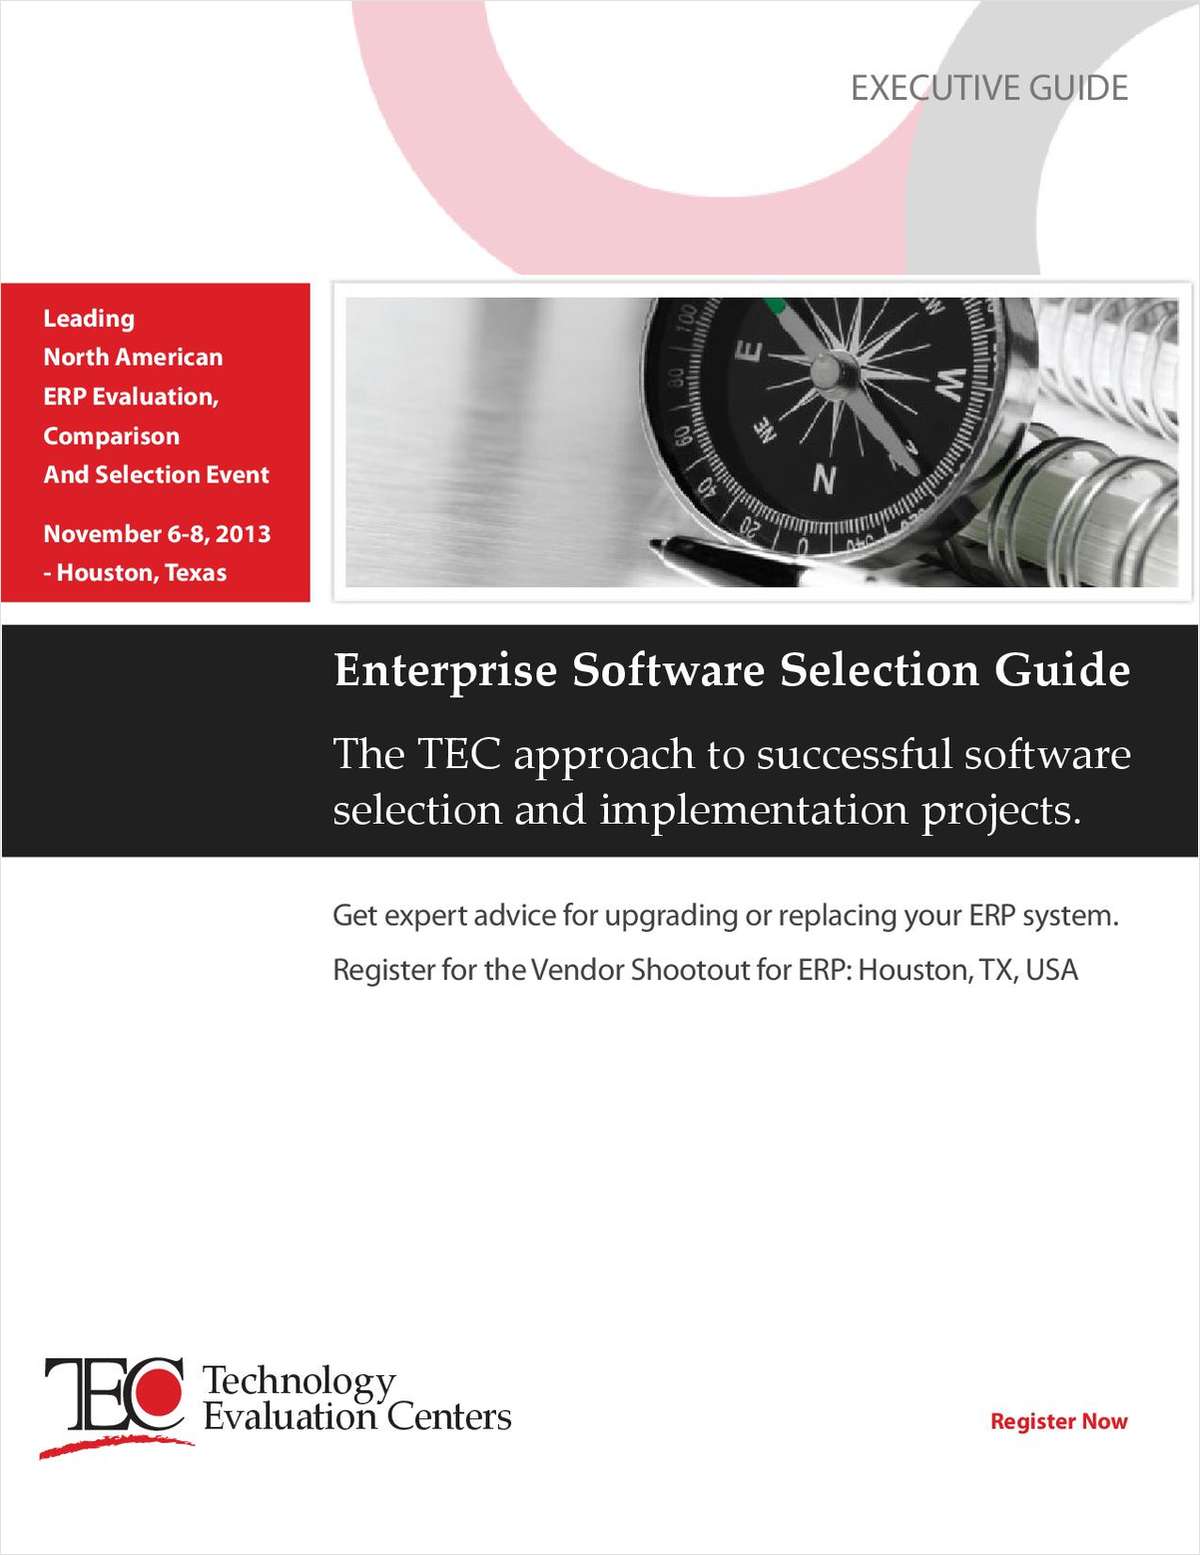 Executive Guide to Successful Enterprise Software Selection